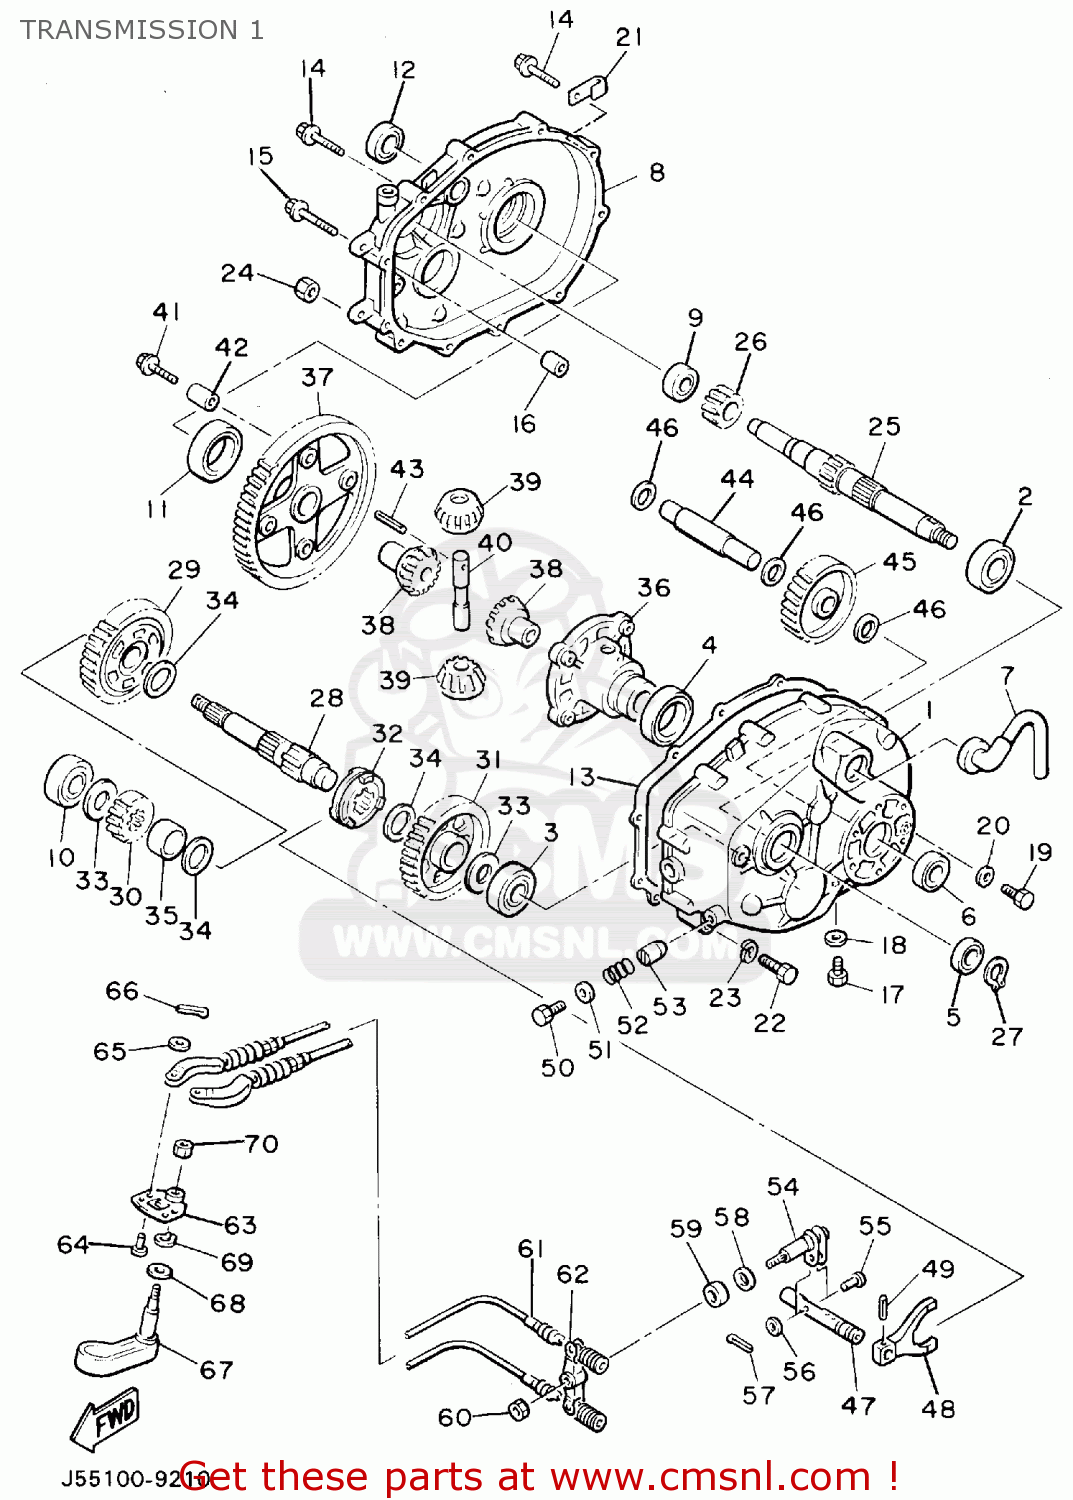 Wiring Diagram For Yamaha G9 Golf Cart - Wiring Diagram Schemas